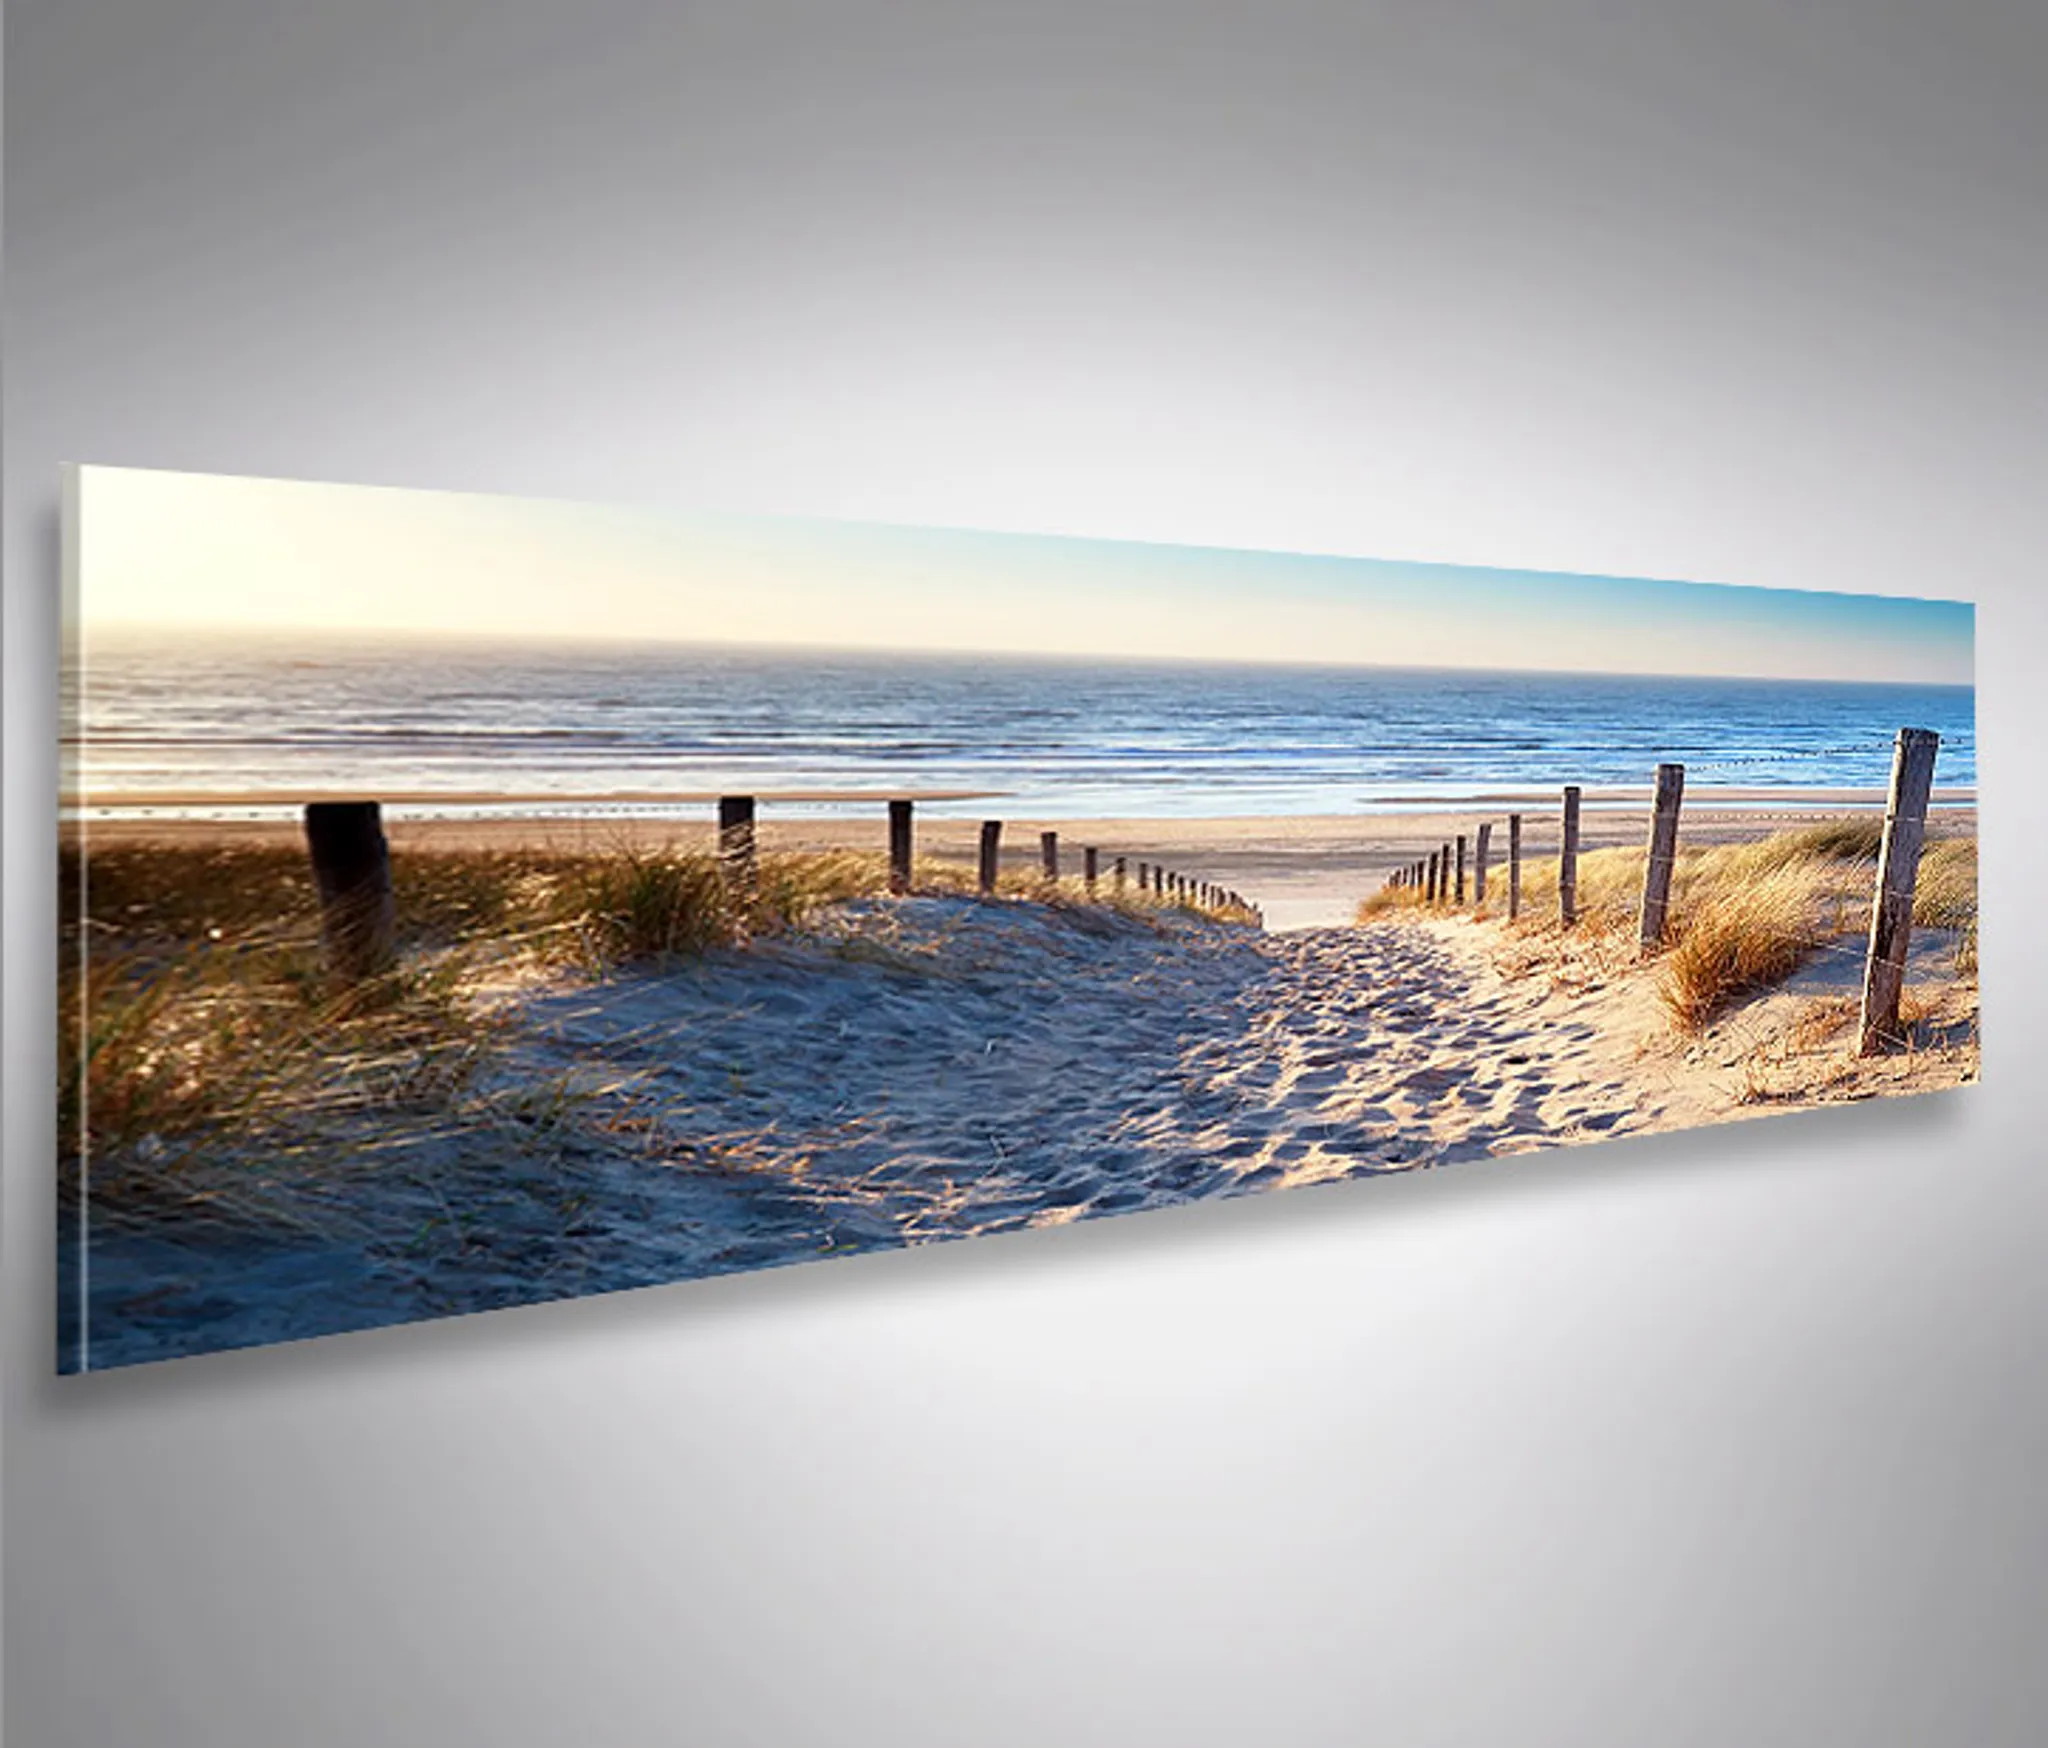 Bild Bilder auf Leinwand islandburner Leinwandbild - zum Poster Panorama Eyecatcher Meer Weg XXL Dünen Wandbild von